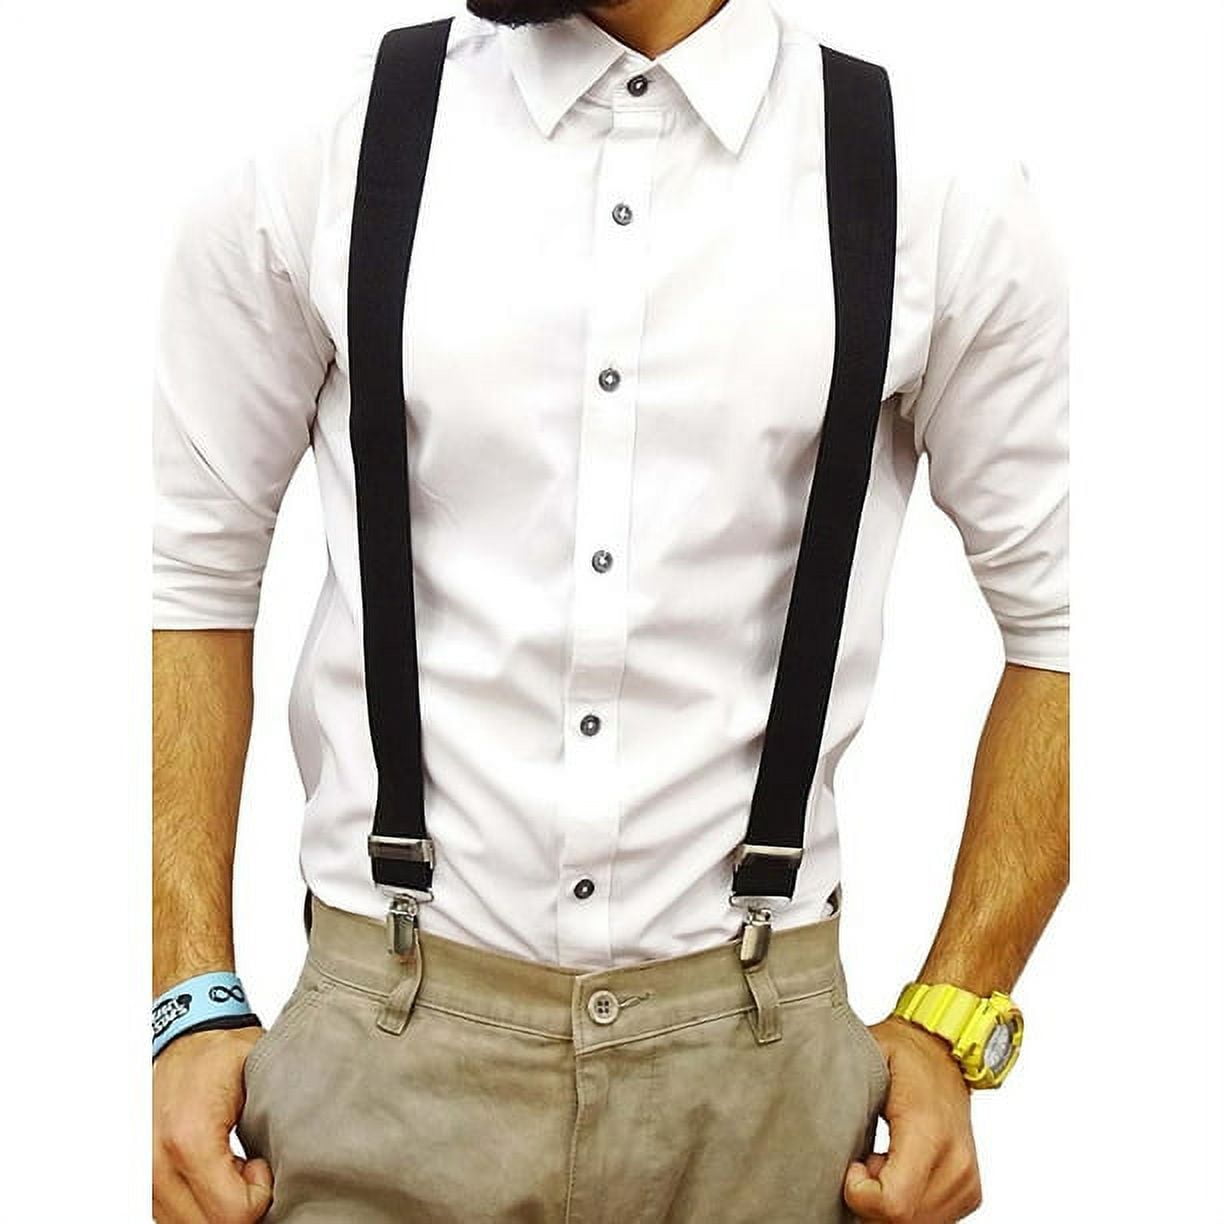 JANSION Suspenders for Men Y Shape Elastic Adjustable Straps Adjustable  Elastic Big & Tall Clip Style Tuxedo Braces